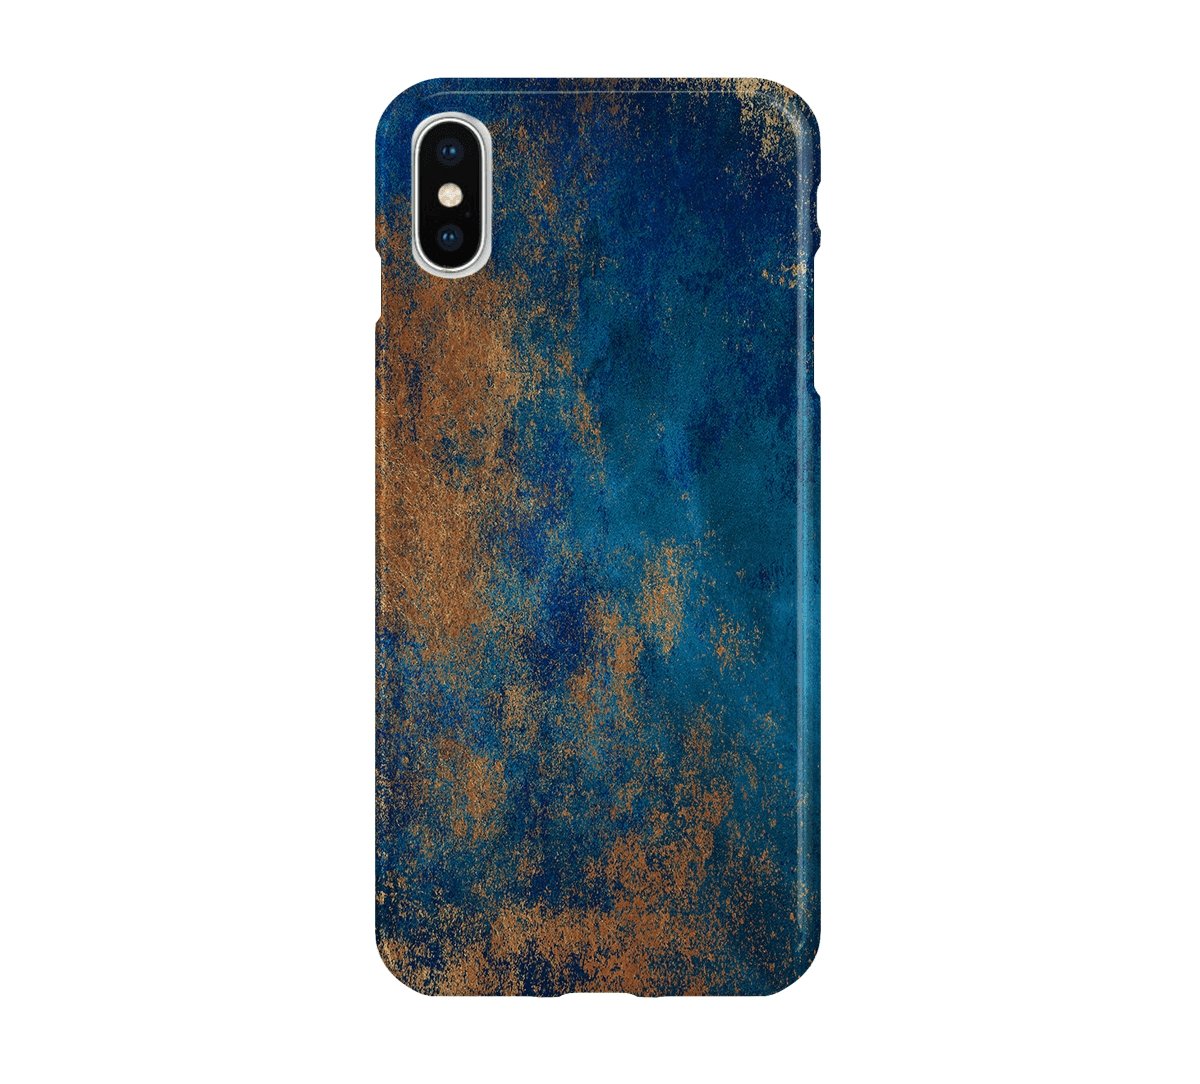 Shanty Rust - iPhone